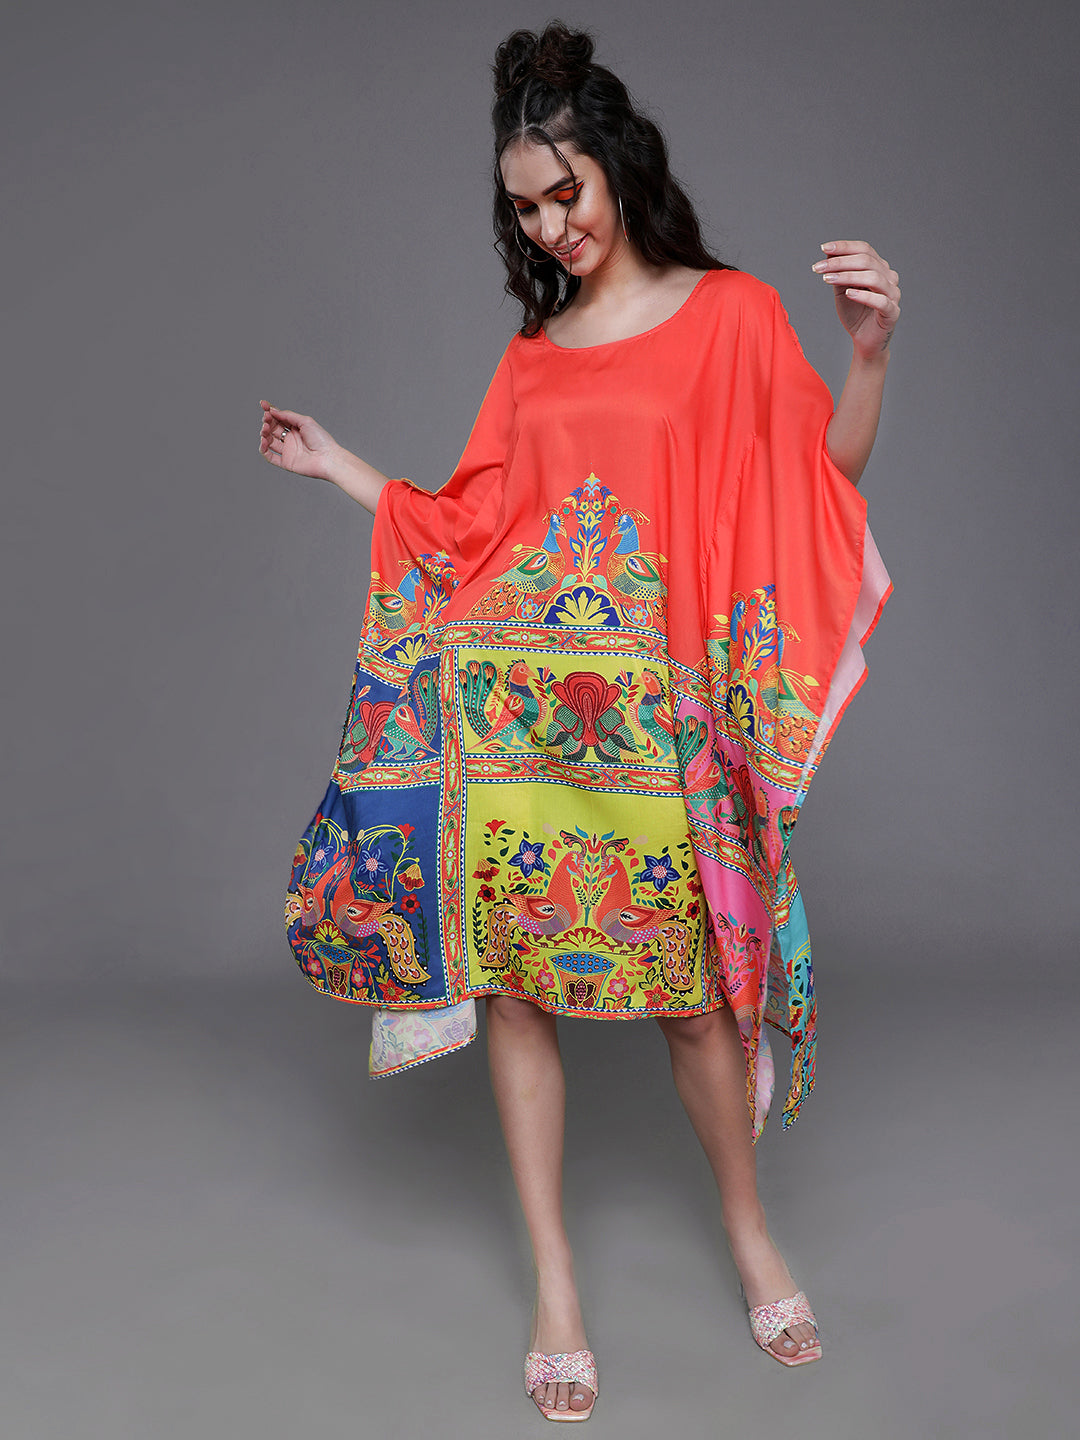 Women's Orange & Yellow Abstract Print Kaftan Dress - Aks